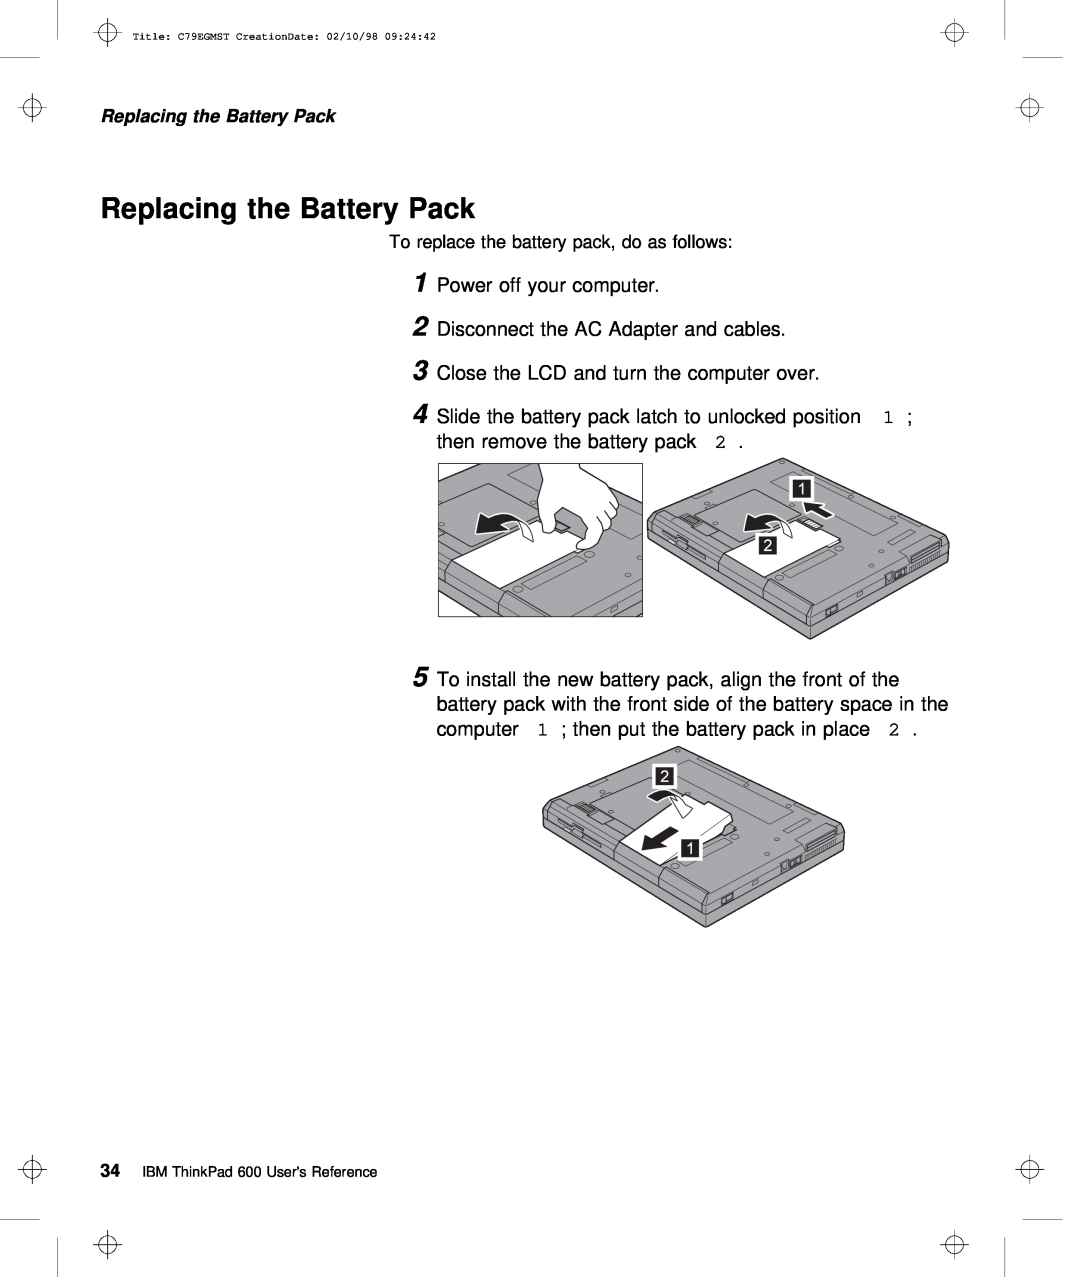 IBM C79EGMST manual Replacing the Battery Pack 